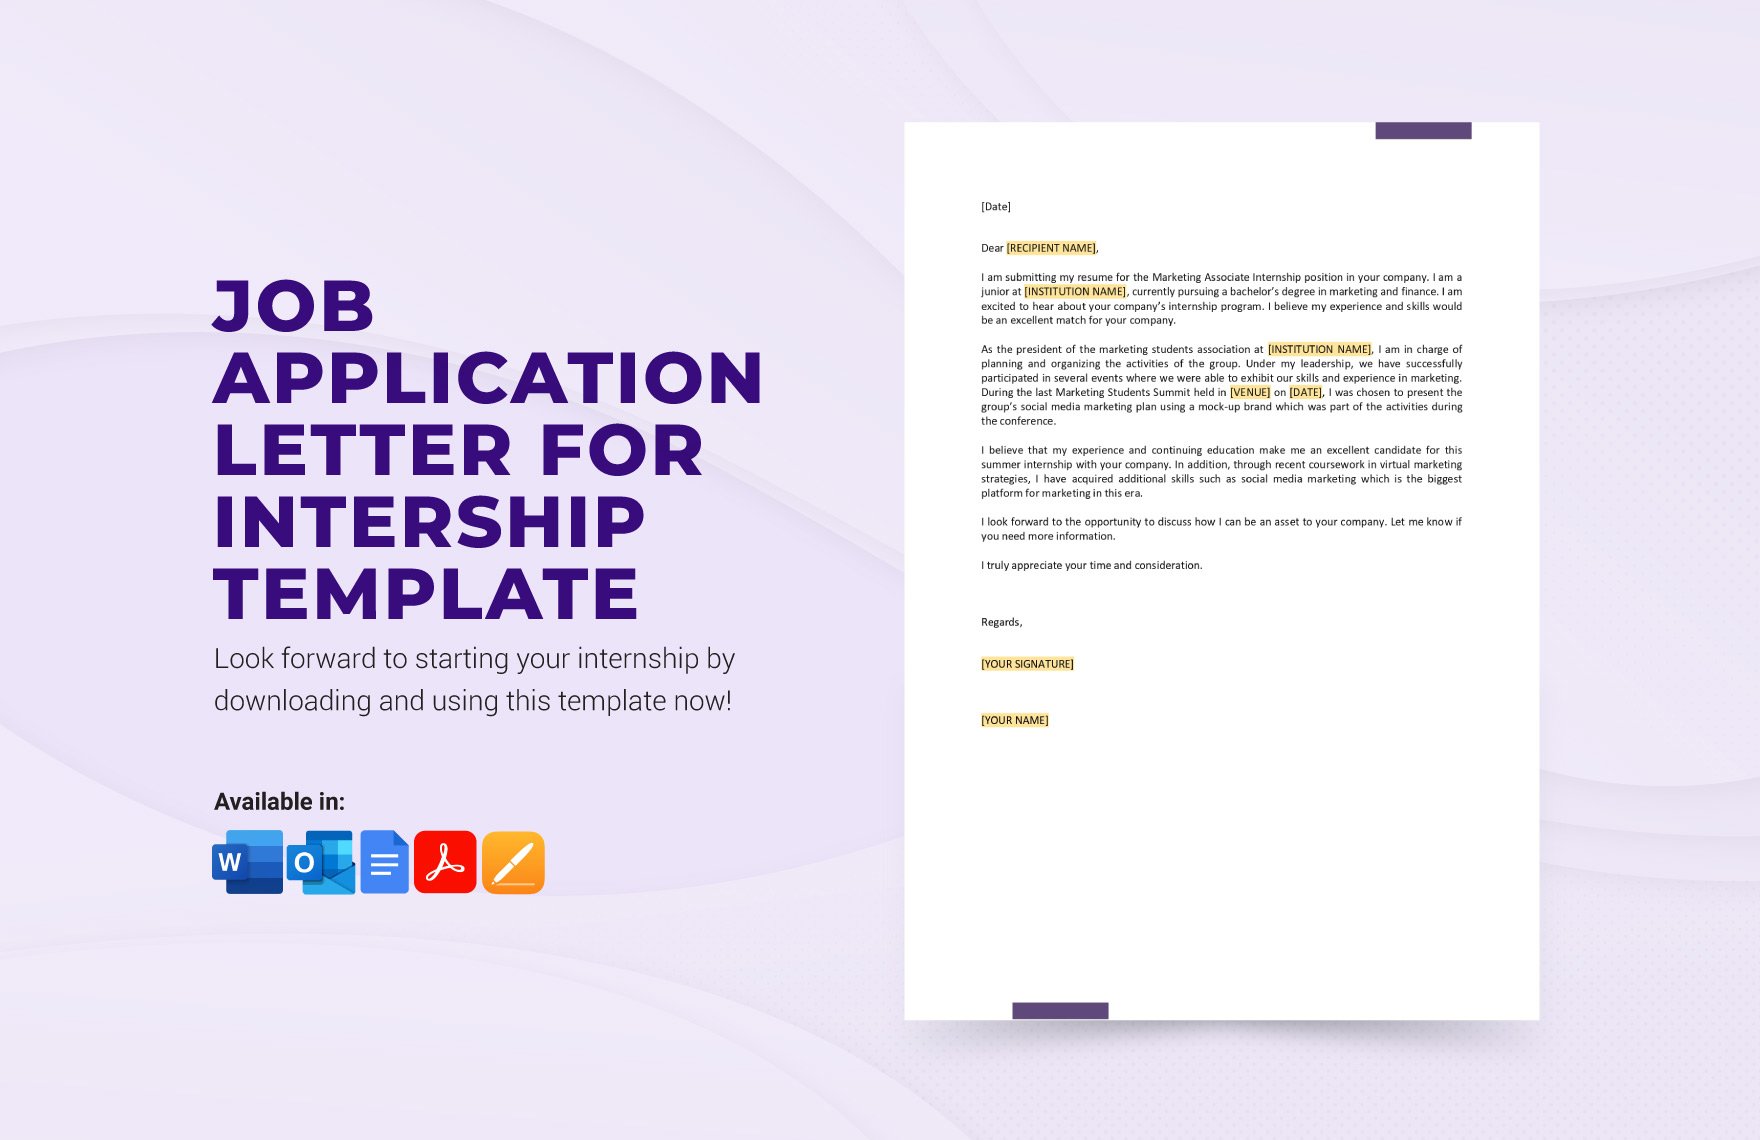 Job Application Letter for Internship